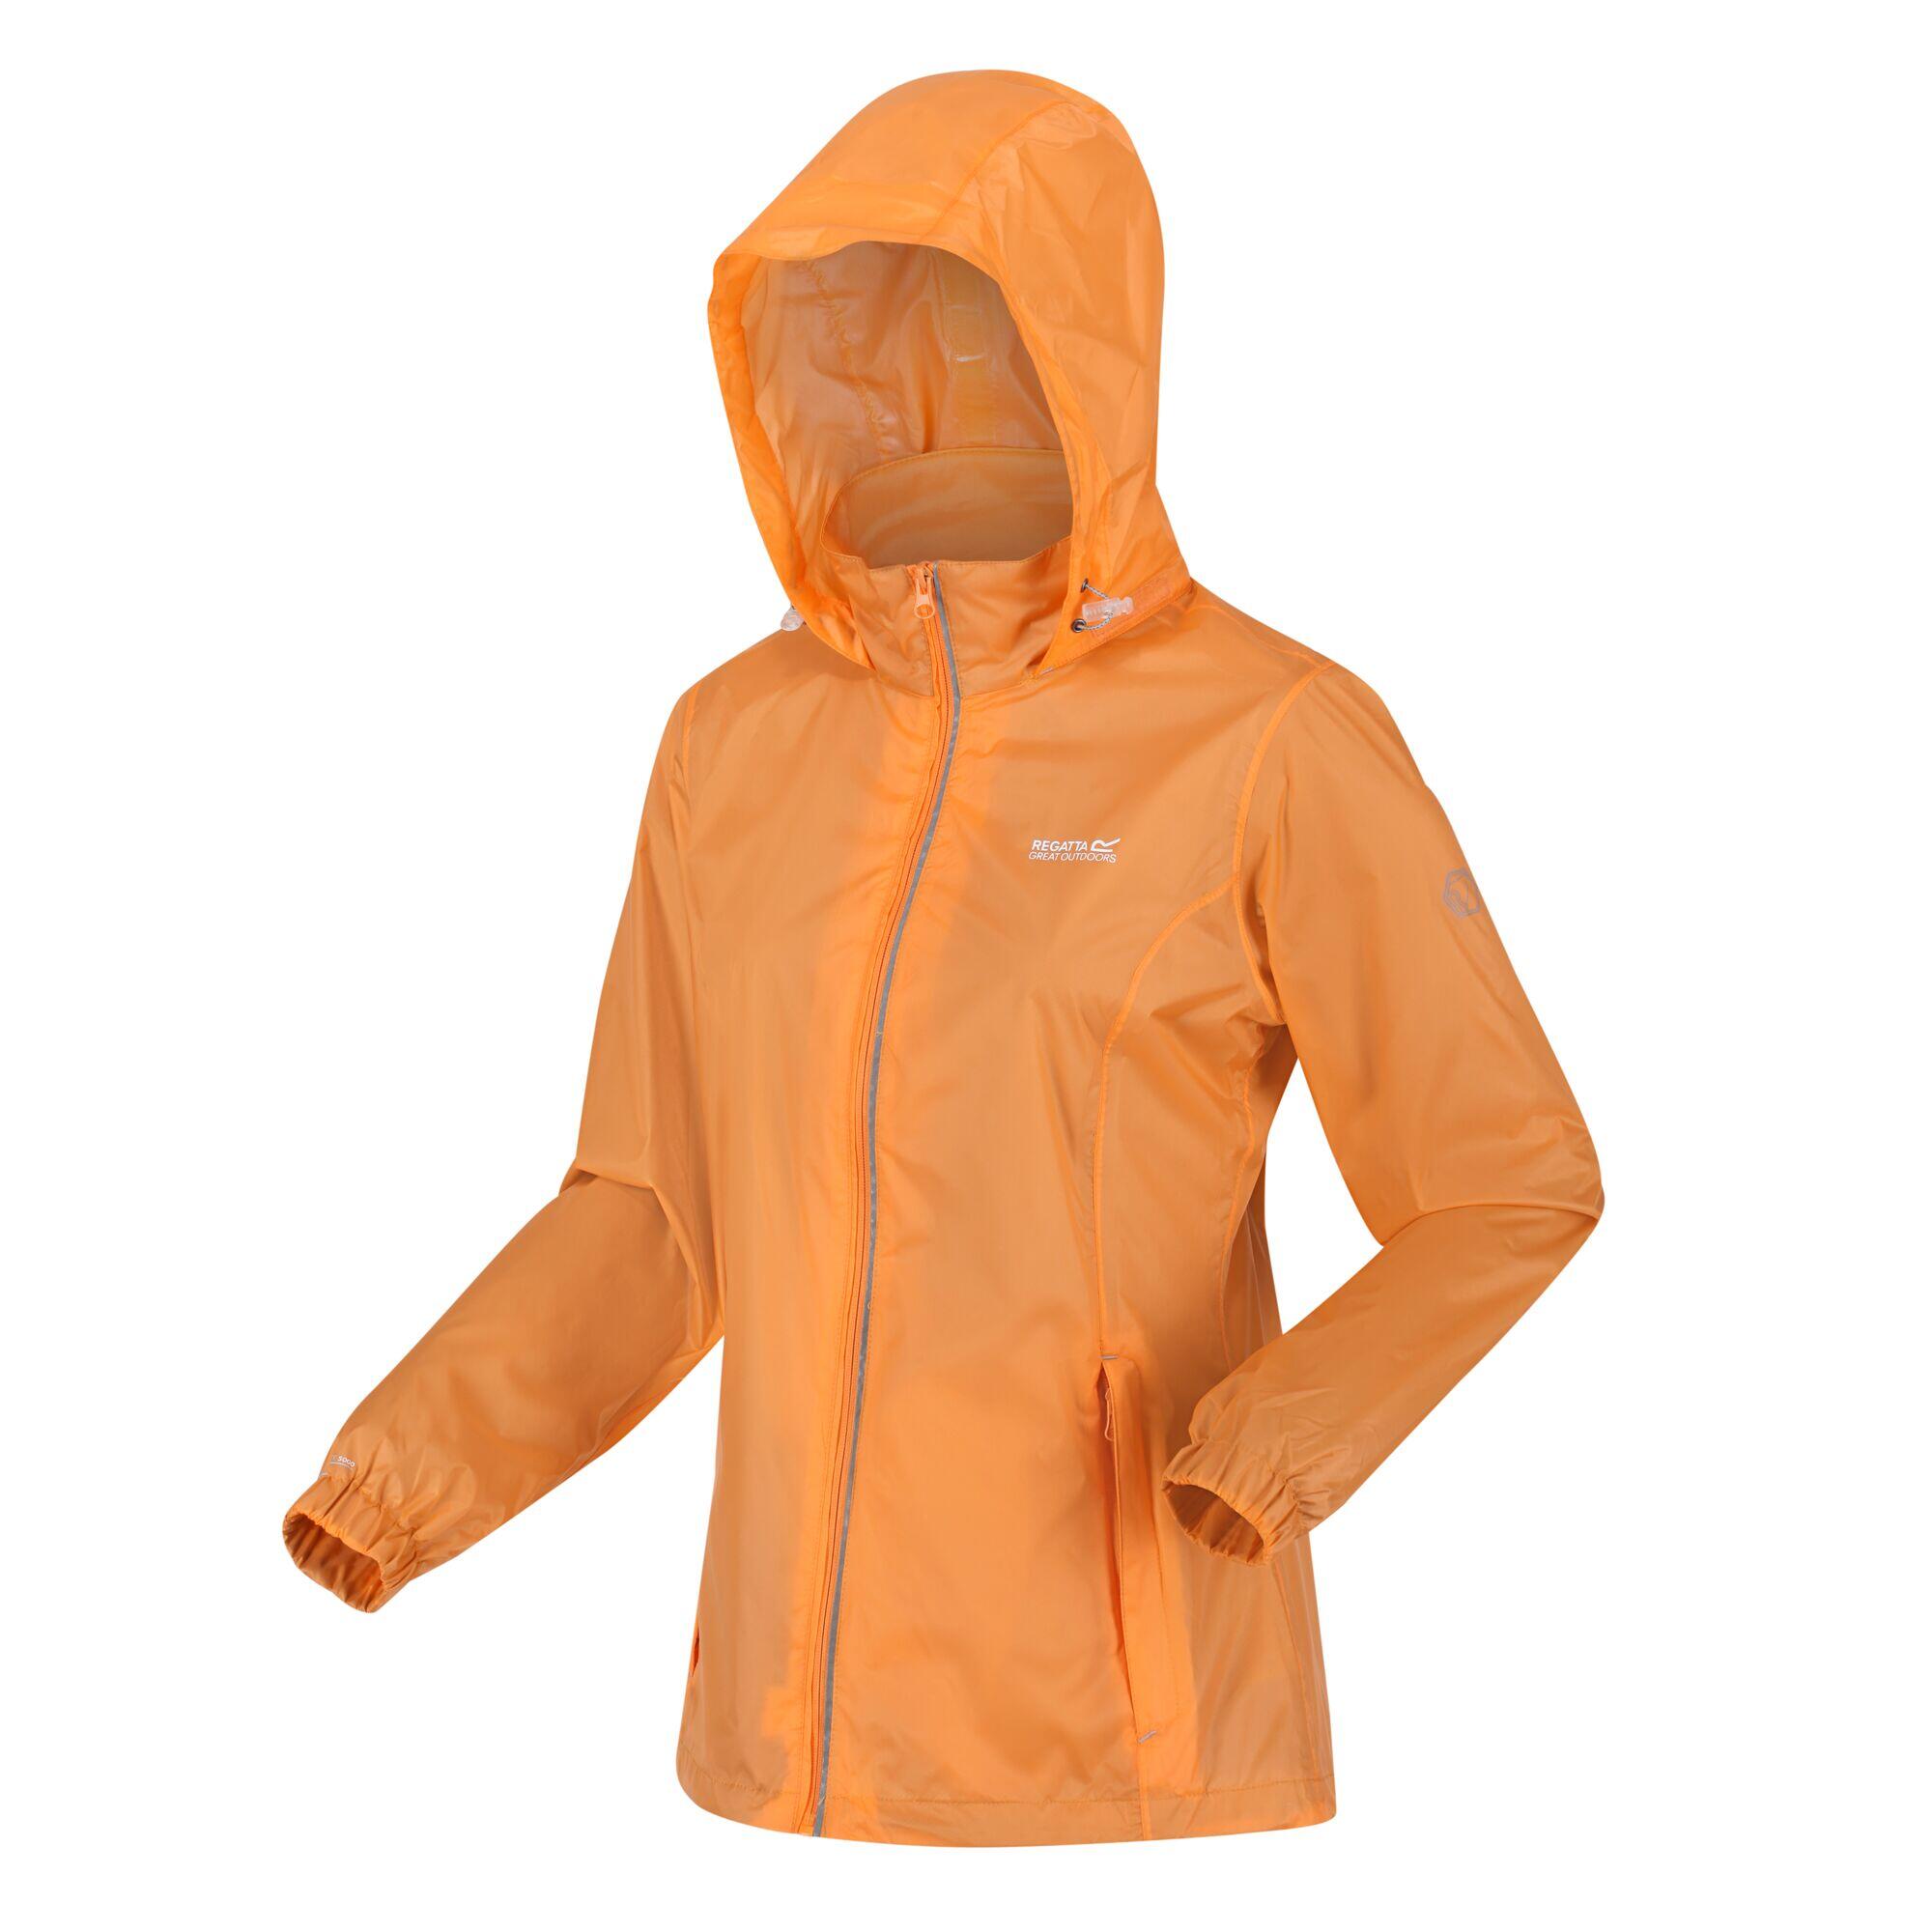 Corinne IV Women's Fitness Waterproof Rain Jacket - Light Orange 1/7